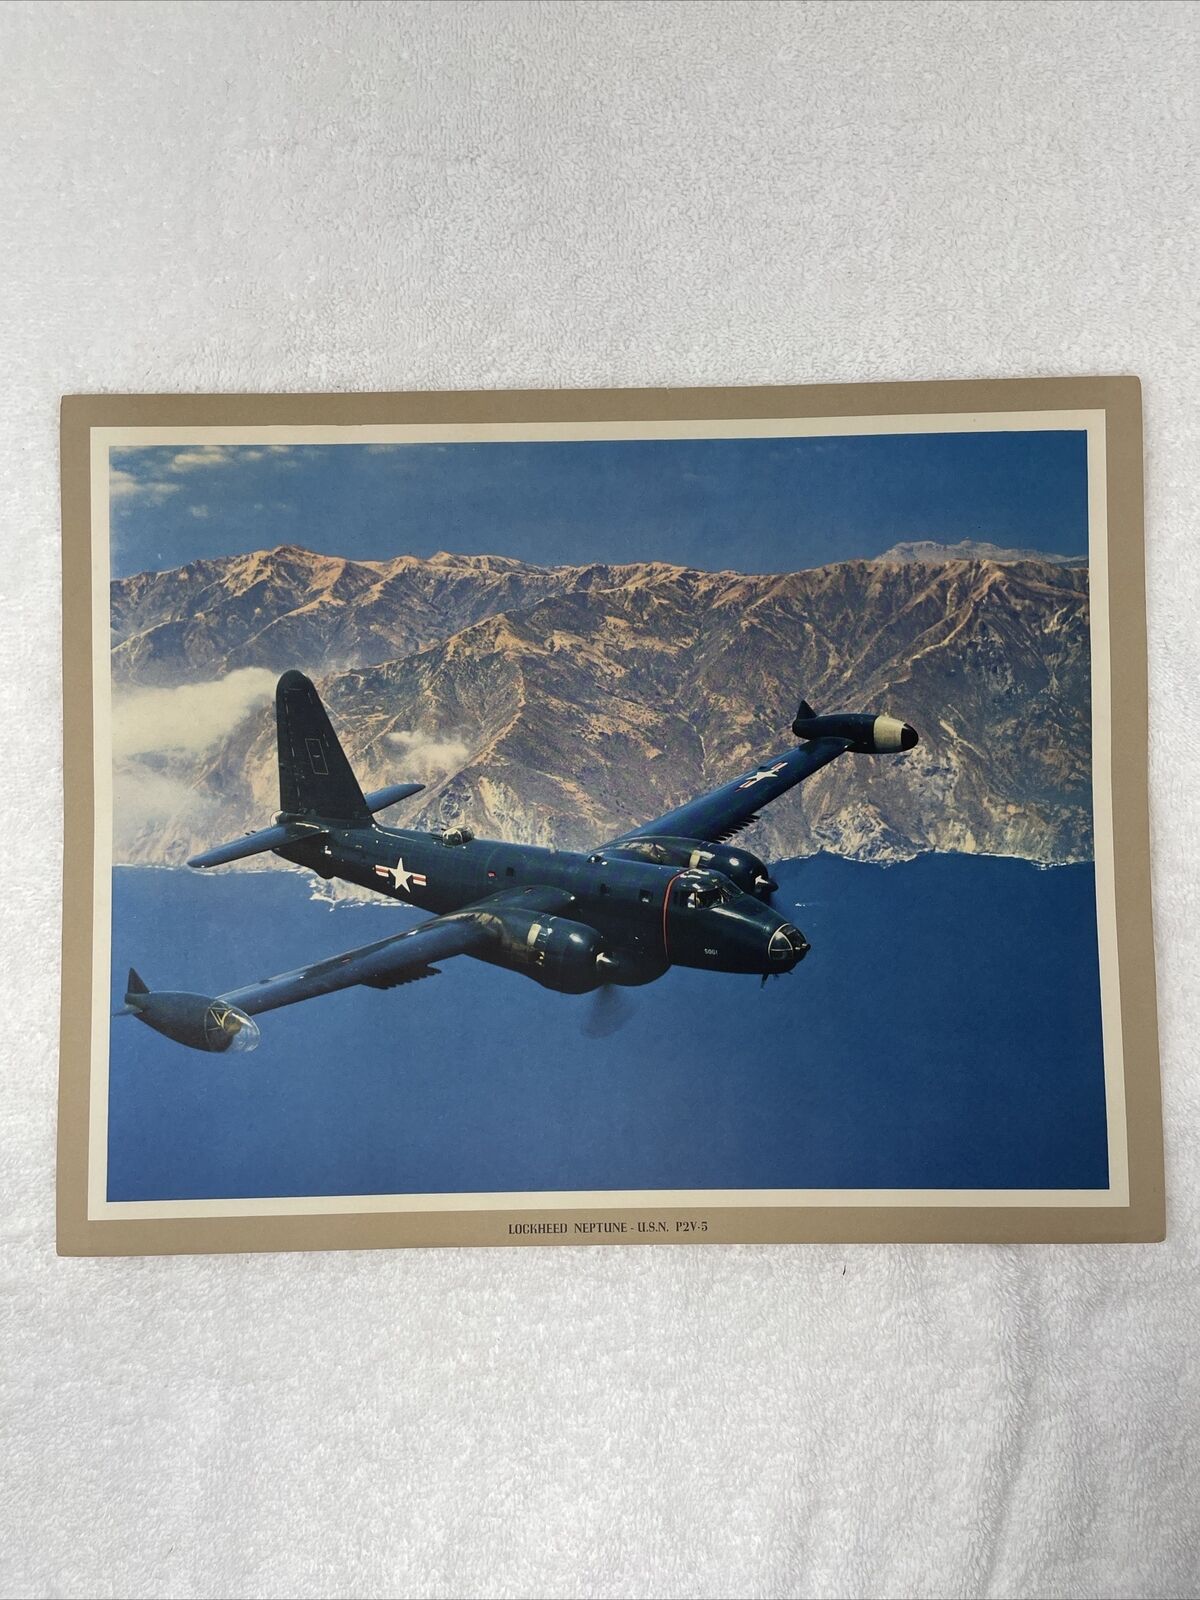 Lockheed Neptune USN-P2V-5 Vintage Print 14”x11” 🇺🇸